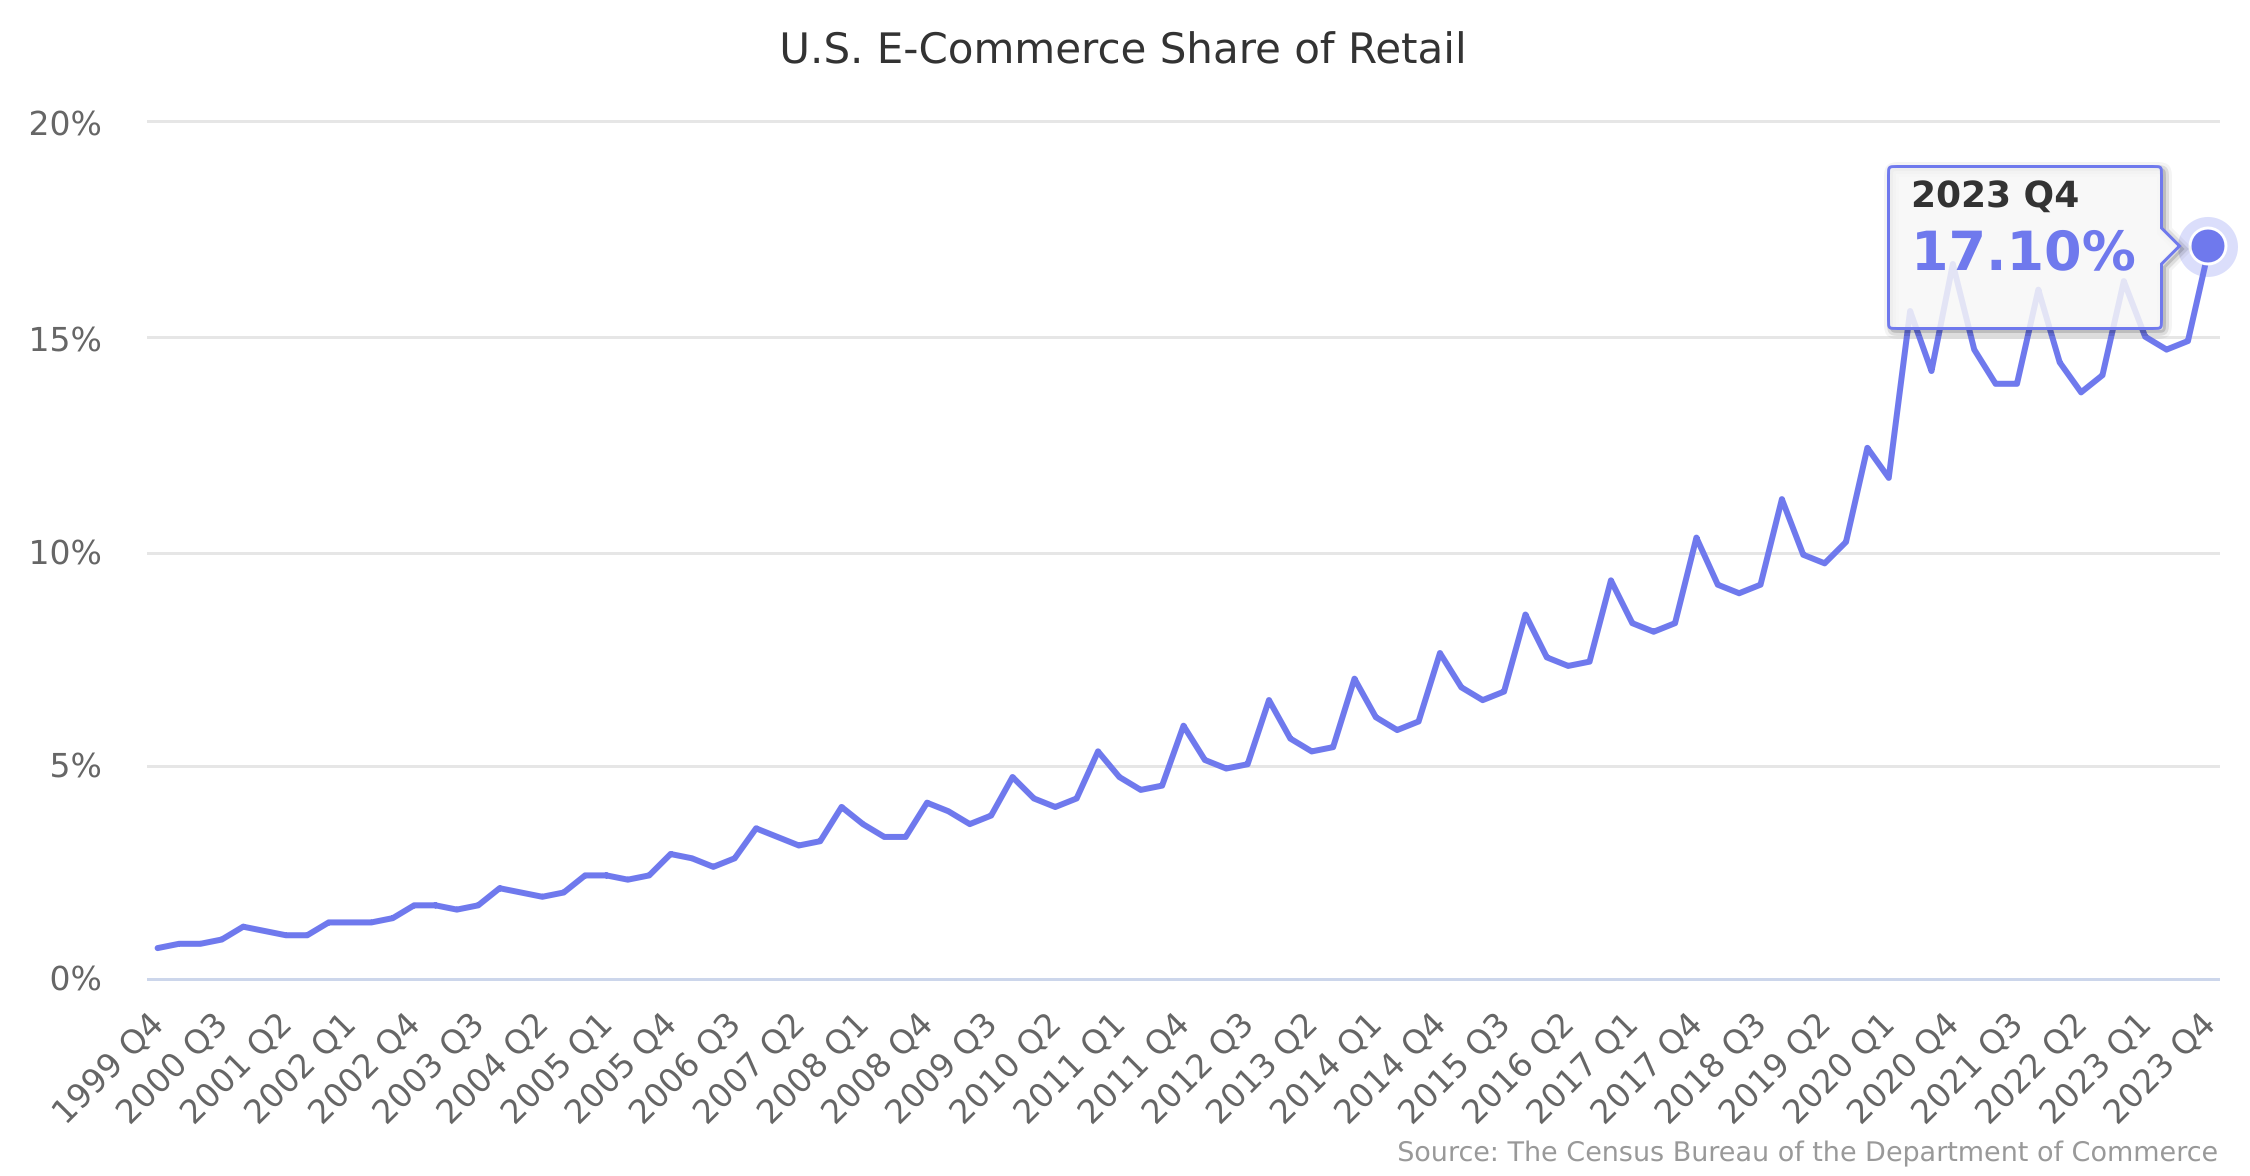 U.S. E-Commerce Share of Retail 1999-2023